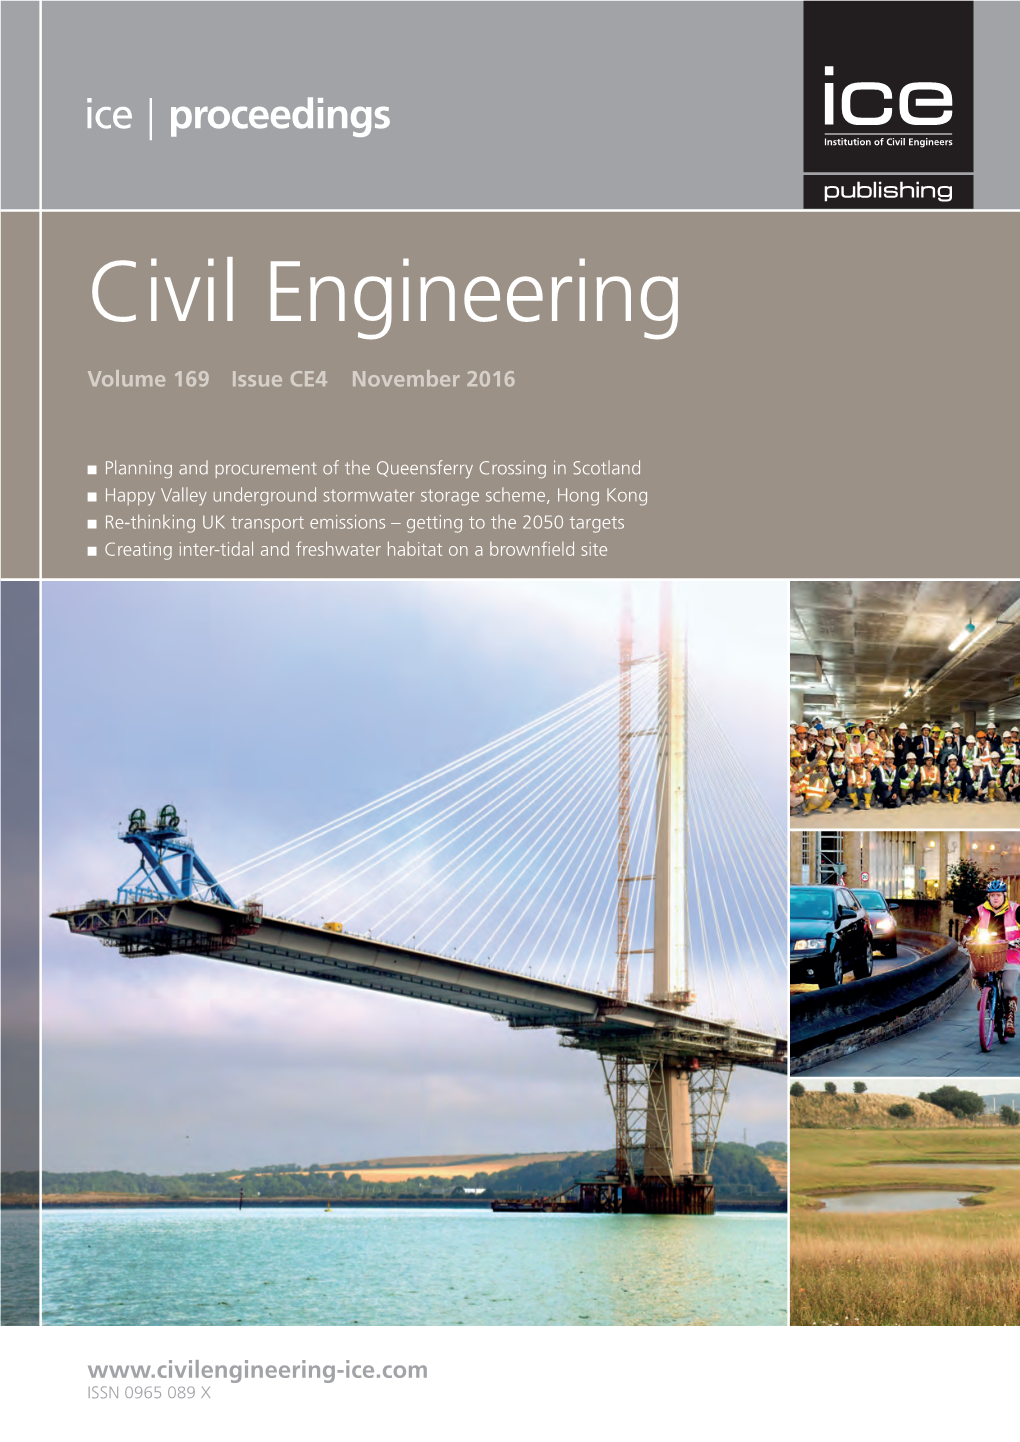 Civil Engineering Volume 169 Issue CE4 November 2016